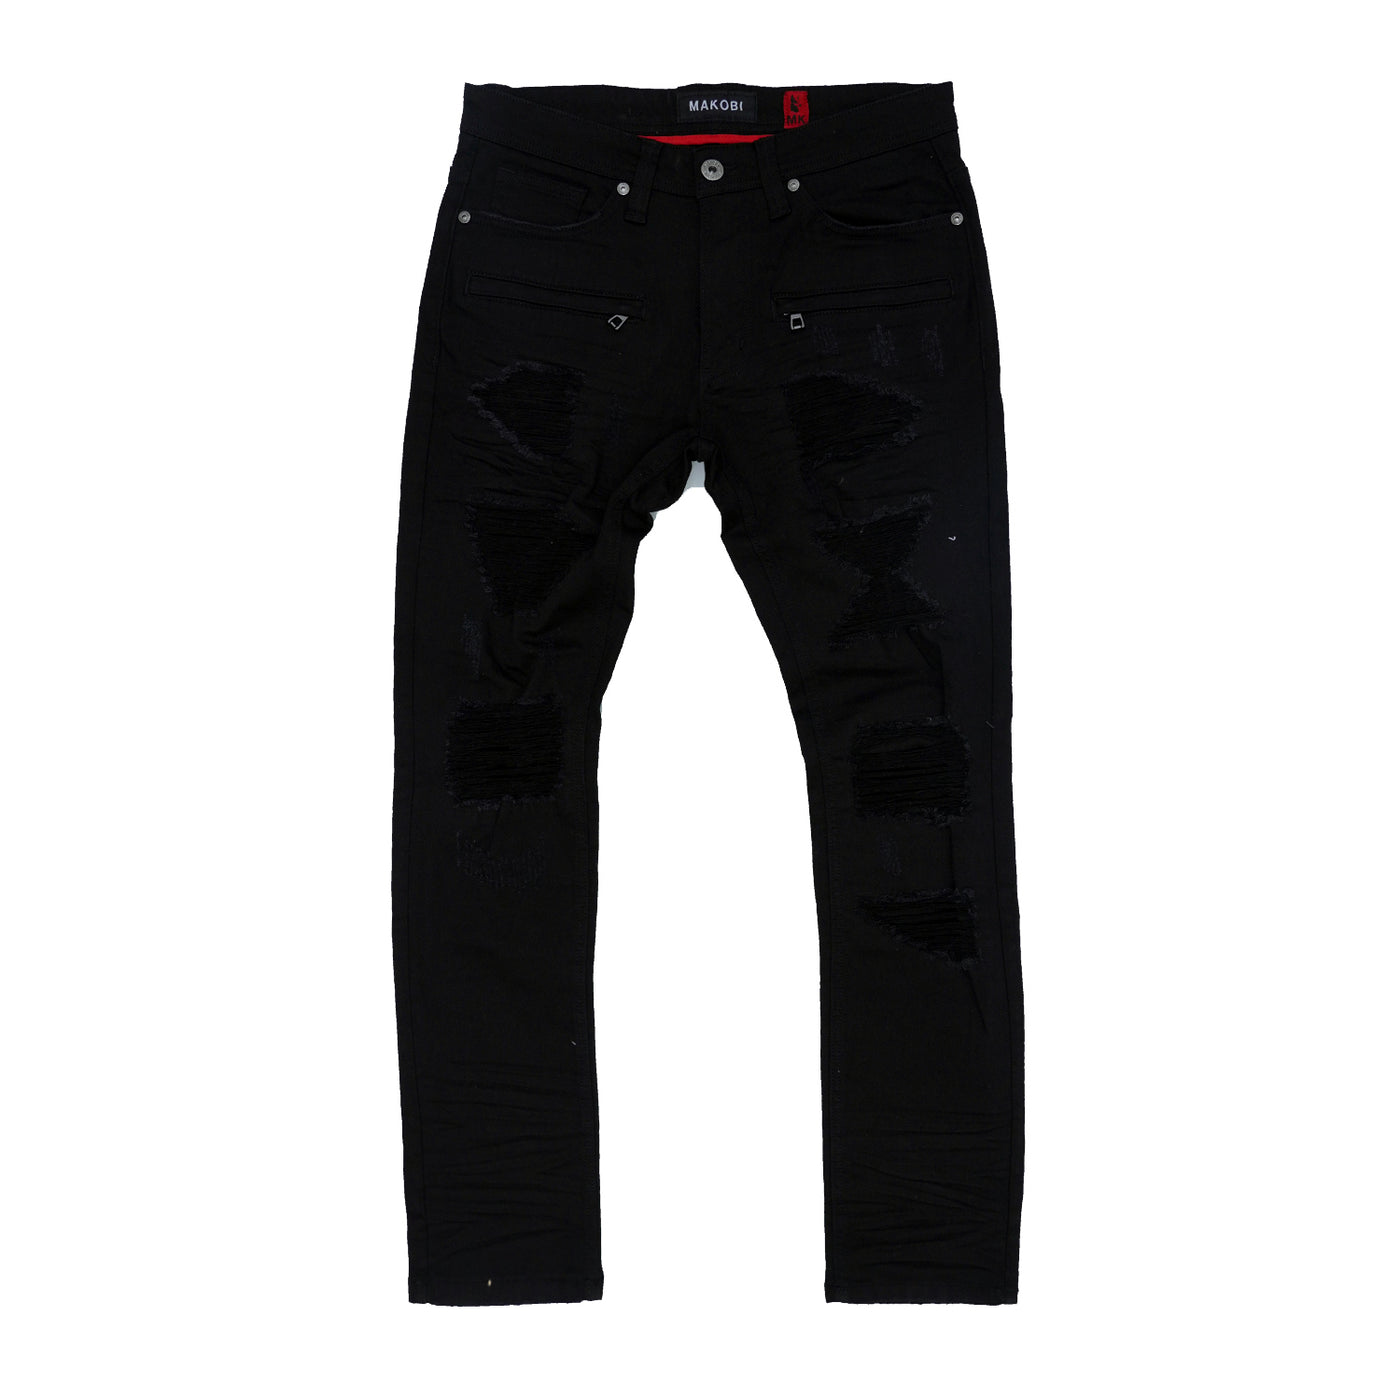 M1944 Pipa Shredded Jeans - Black/black